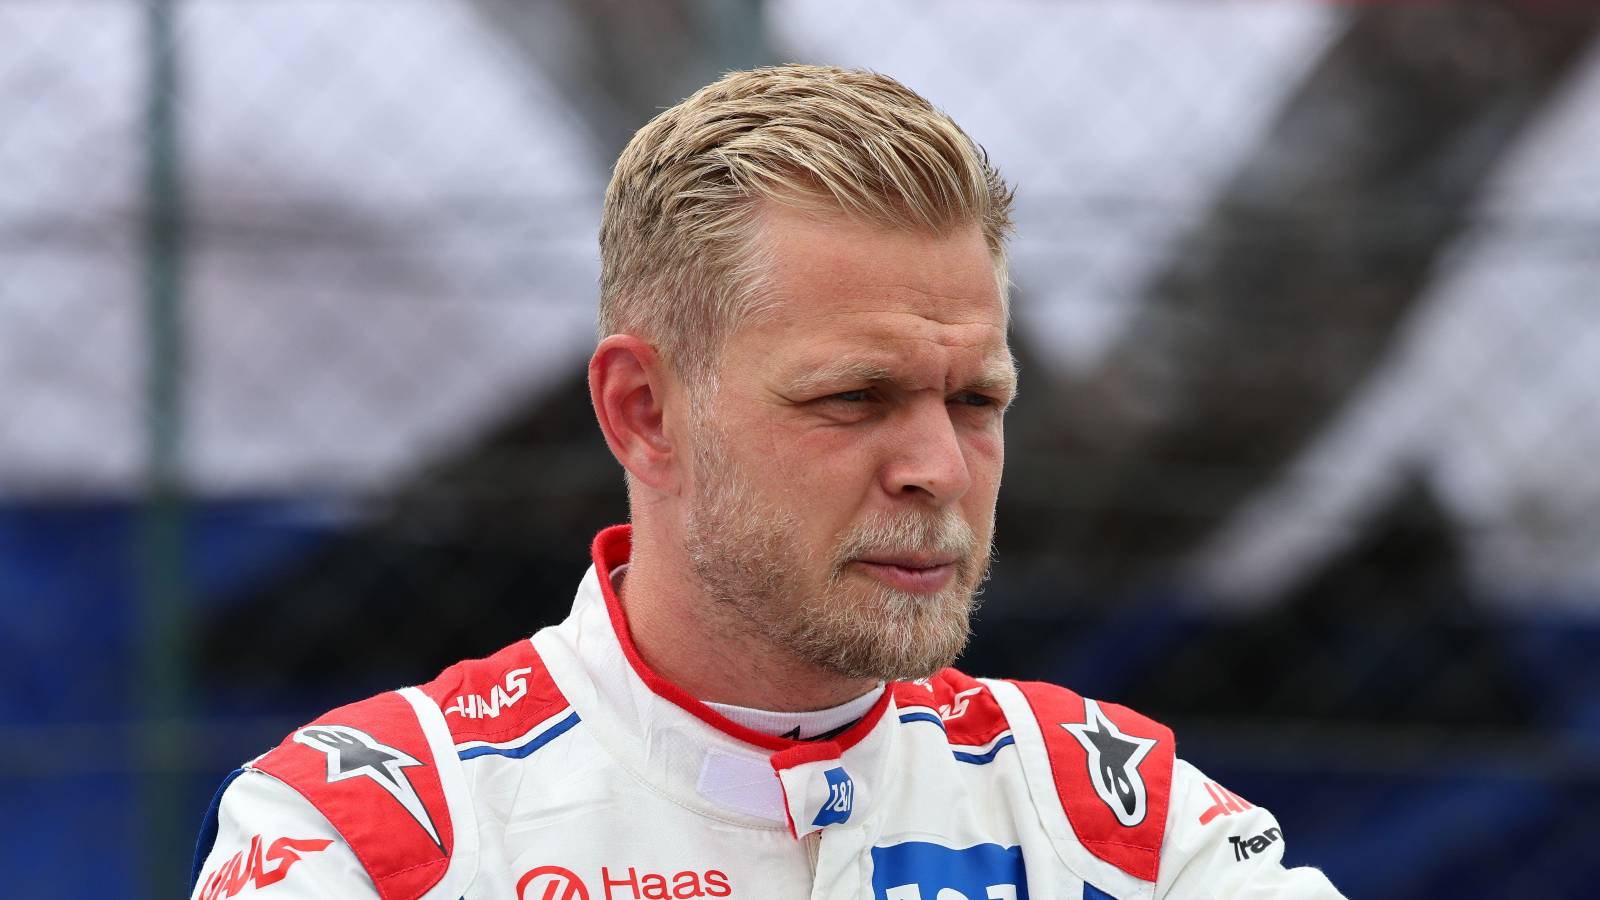 Kevin Magnussen at the Hungarian Grand Prix. Hungaroring July 2022.